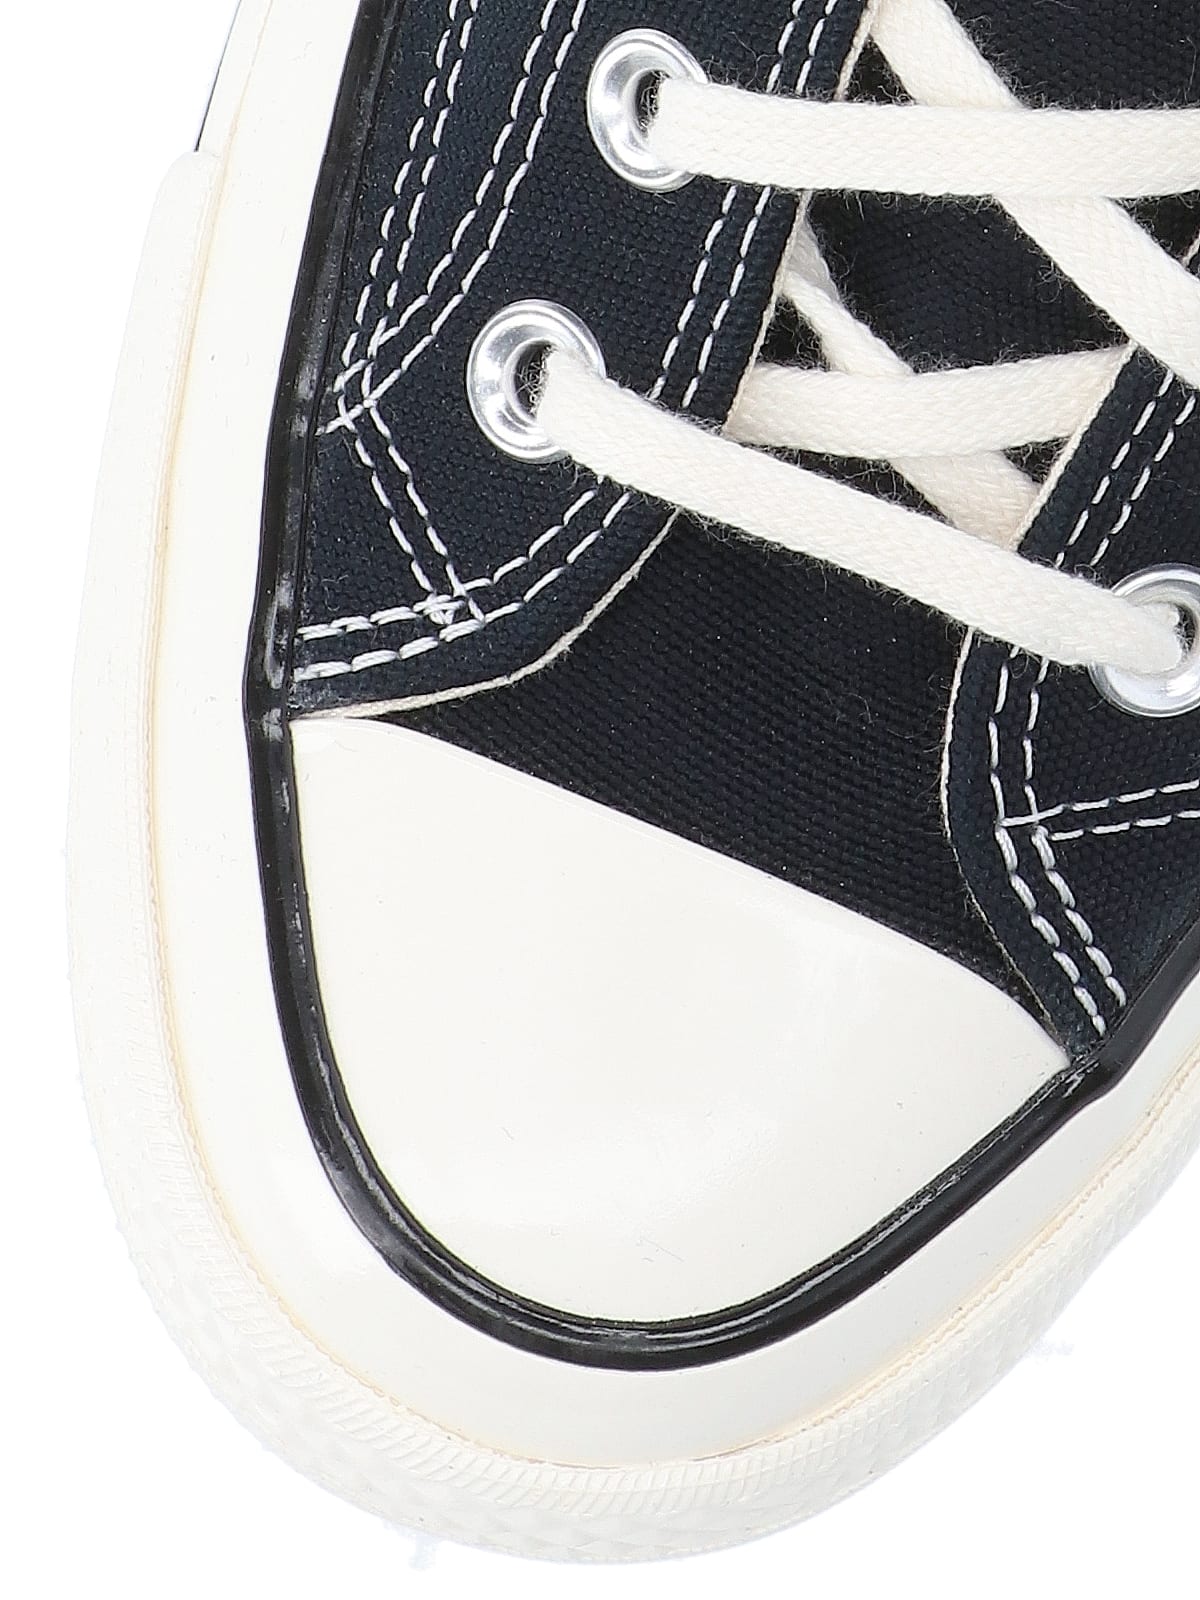 Shop Converse Chuck 70 Low Top Sneakers In Black